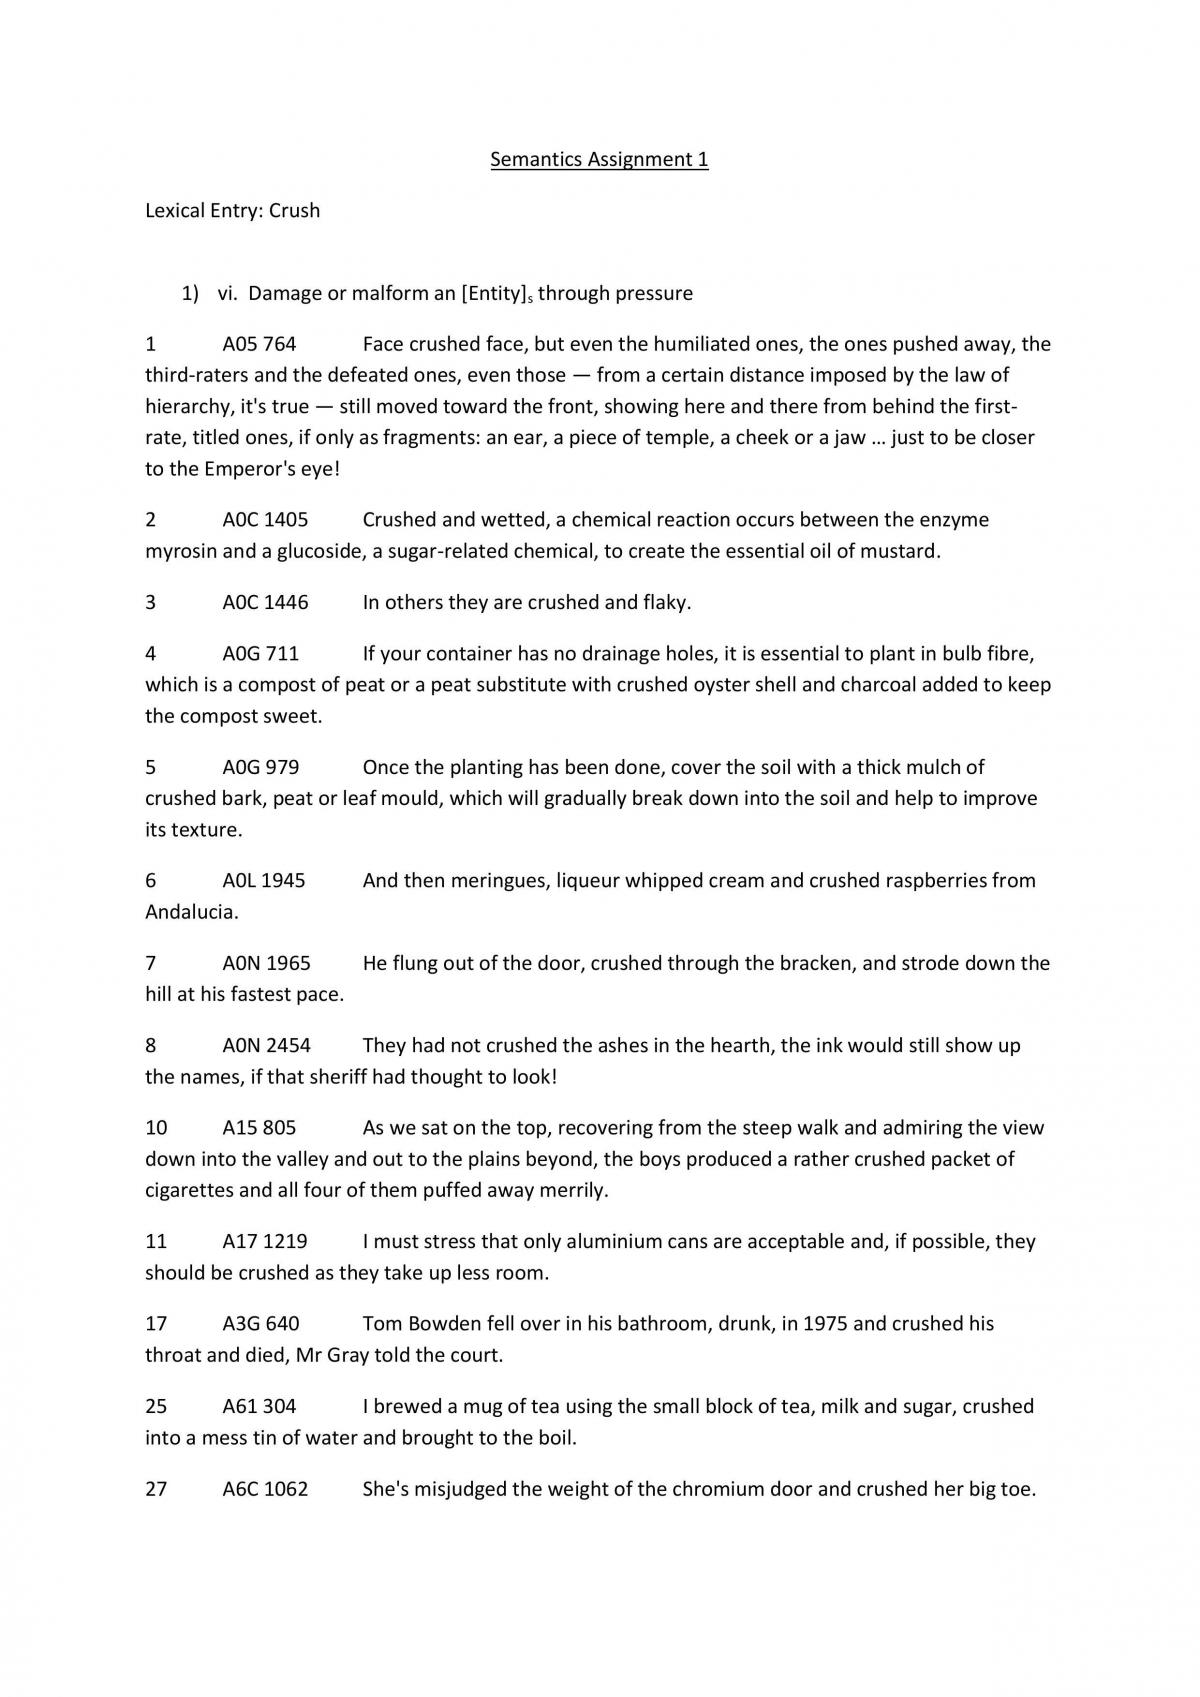 Semantics Assignment 1 - Page 1